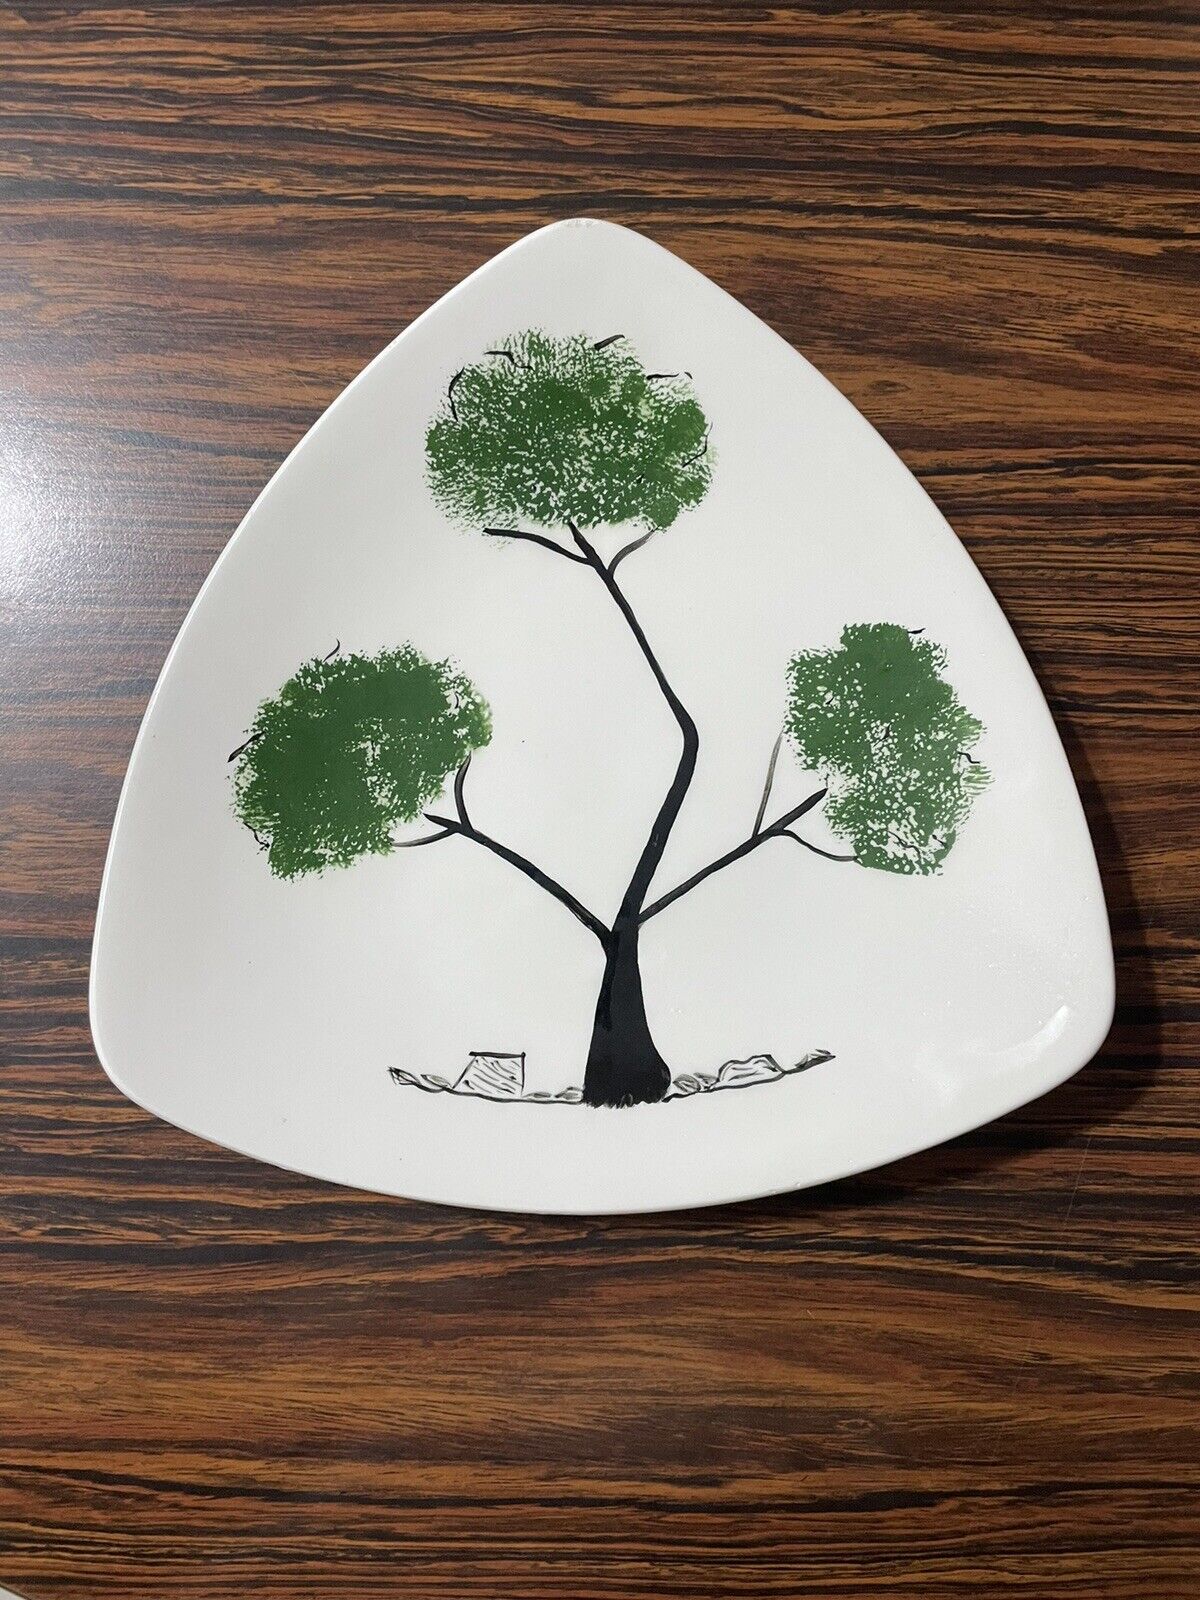 Vintage Ceramic Tray Triangle With Tree 1960 